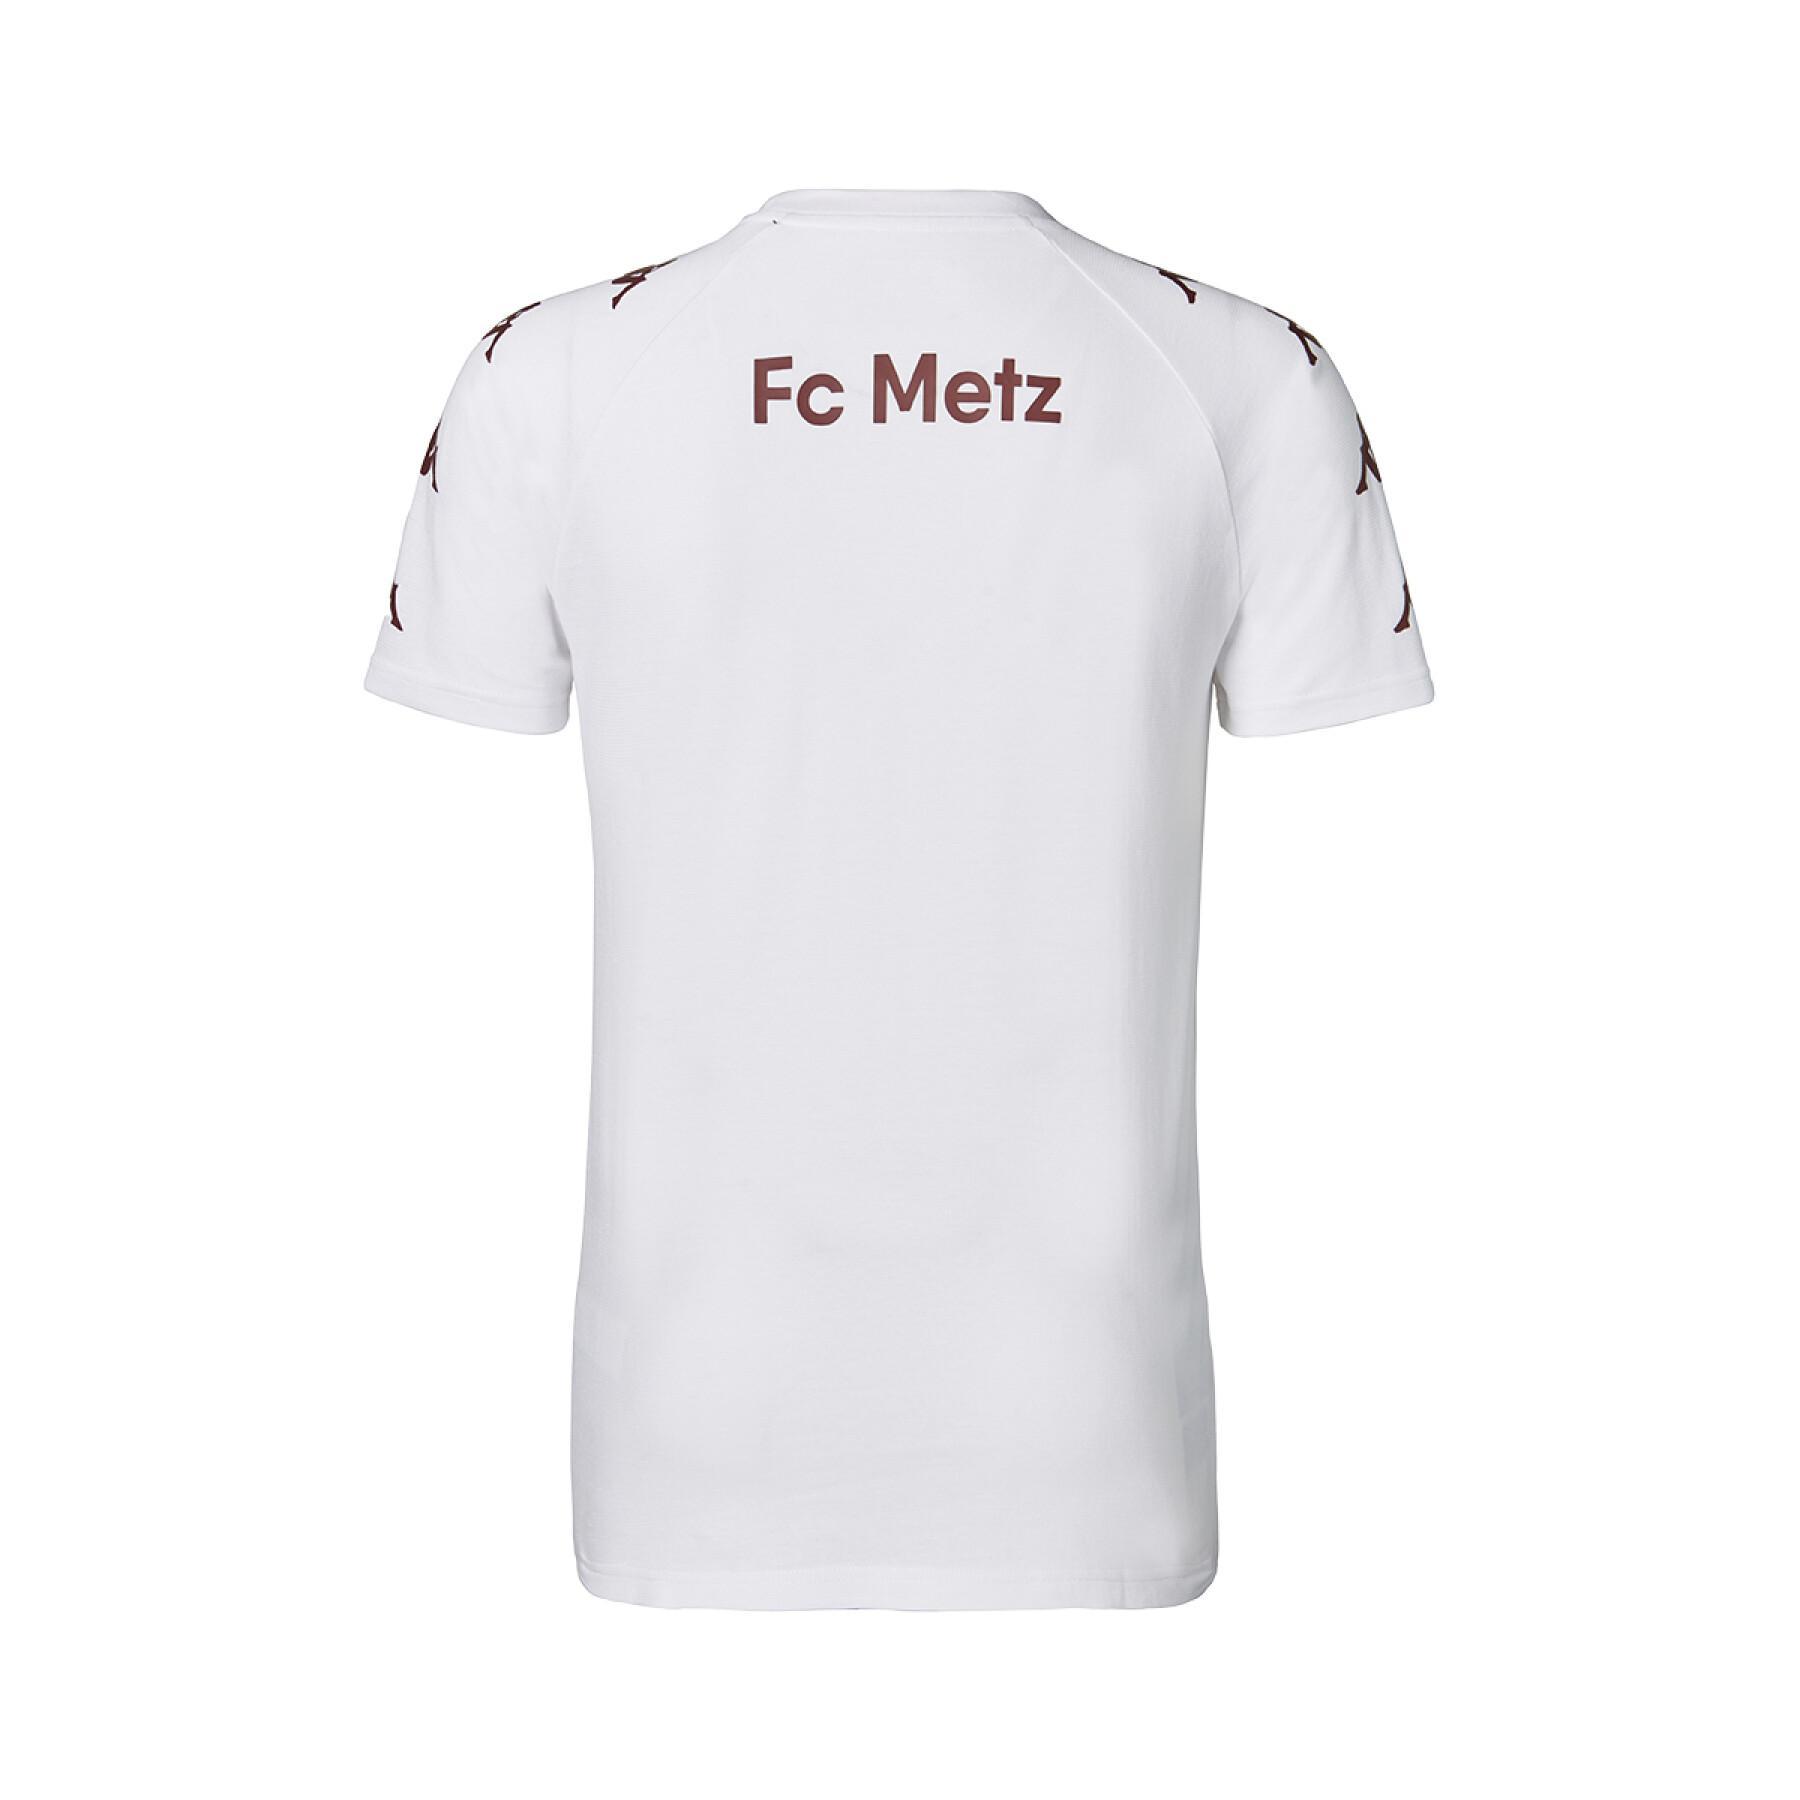 Child's T-shirt FC Metz 2021/22 ancone